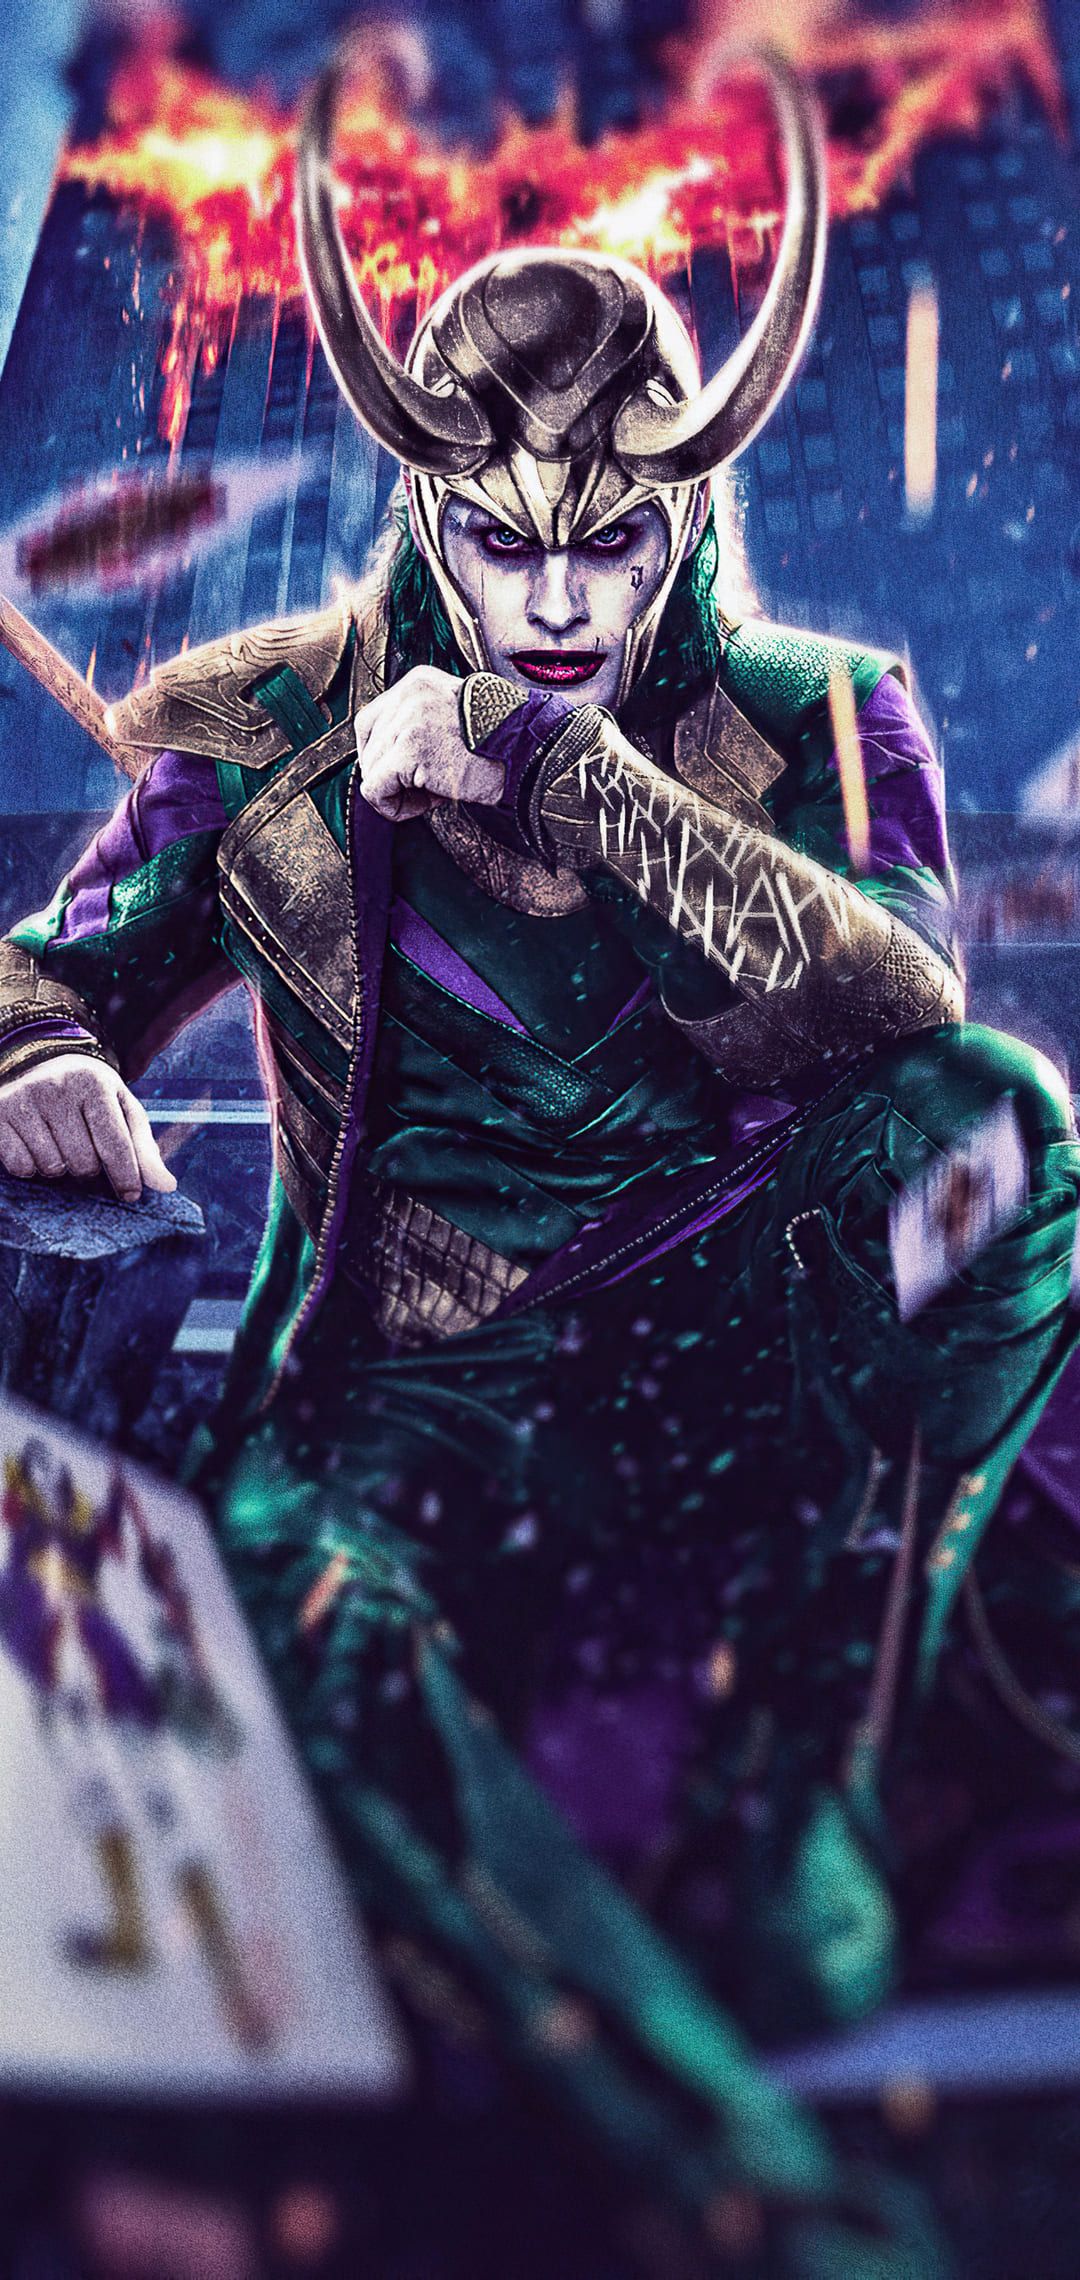 Joker Android Wallpaper 4k Best Joker Wallpaper Download